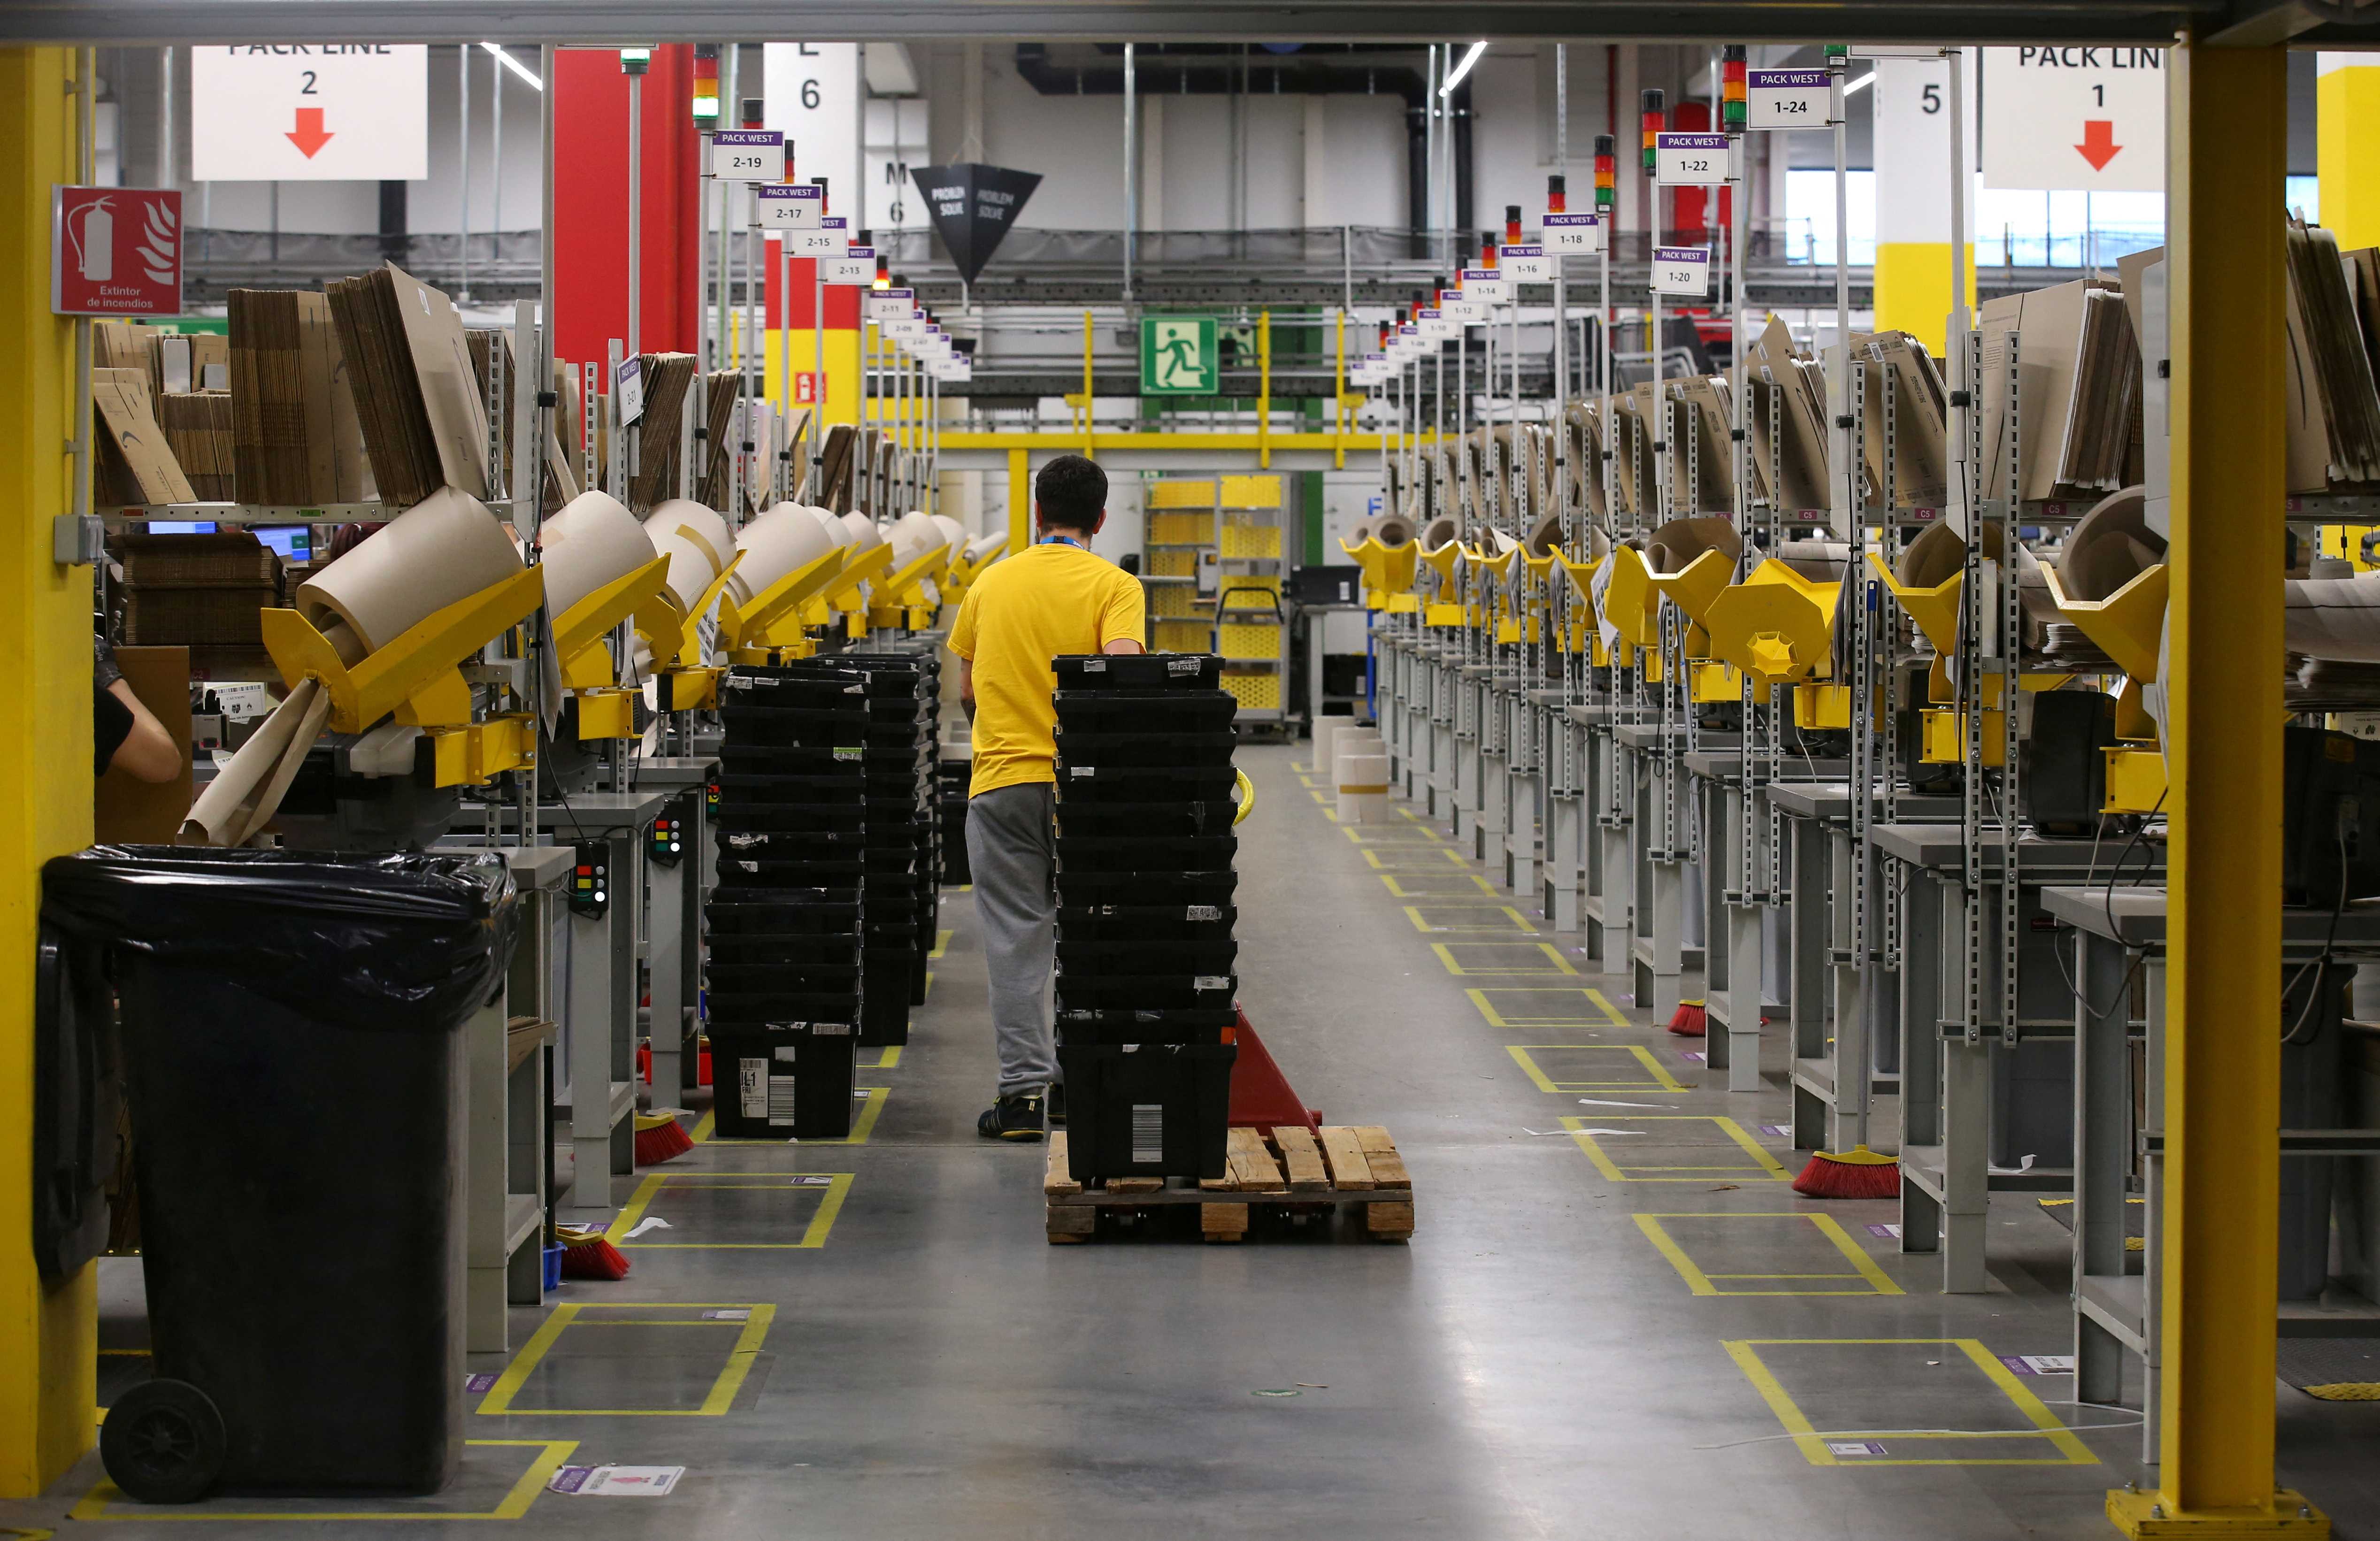 A worker moves boxes at a packaging area inside Amazon distribution center in El Prat de Llobregat